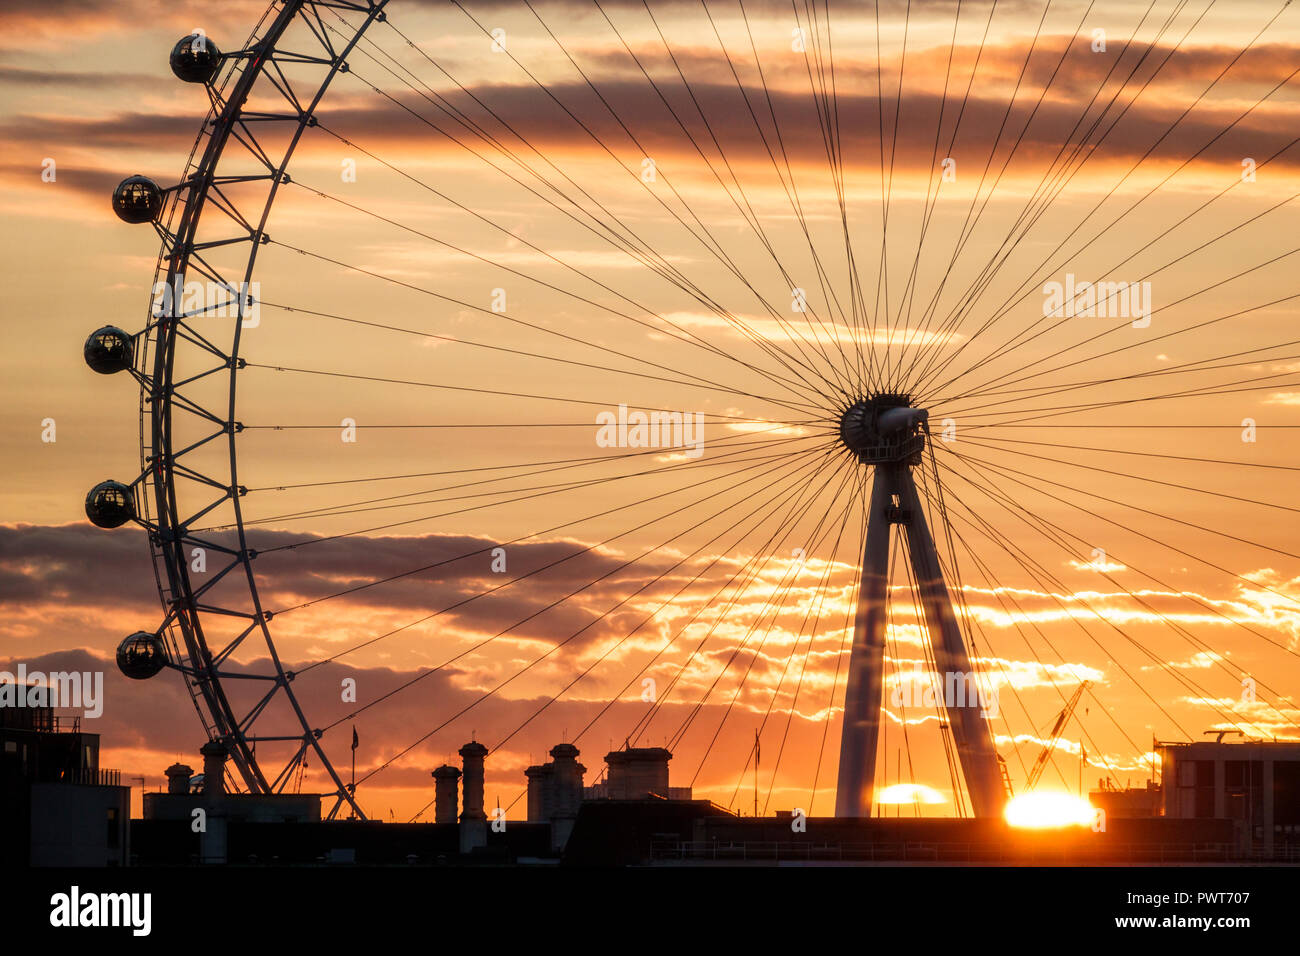 Londra Inghilterra,UK,Lambeth South Bank,London Eye,ruota panoramica gigante,ruota panoramica,attrazione,Marks Barfield Architects,tramonto,UK GB inglese Europa, Foto Stock